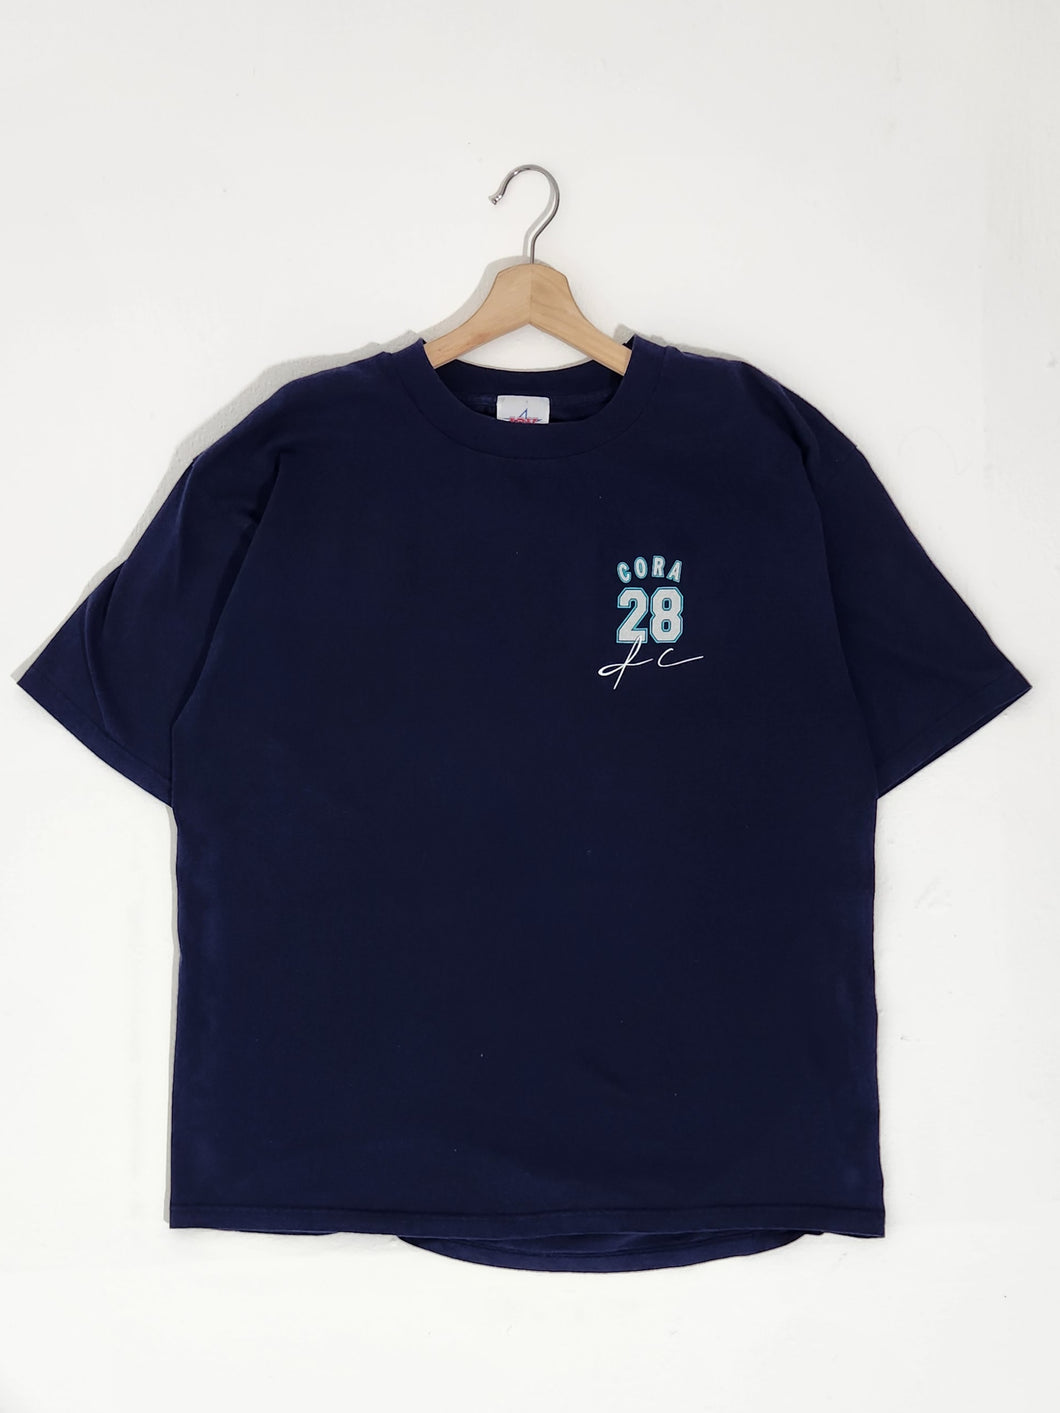 Vintage Seattle Mariners 'Joey Cora' Jersey T-Shirt Sz. XL